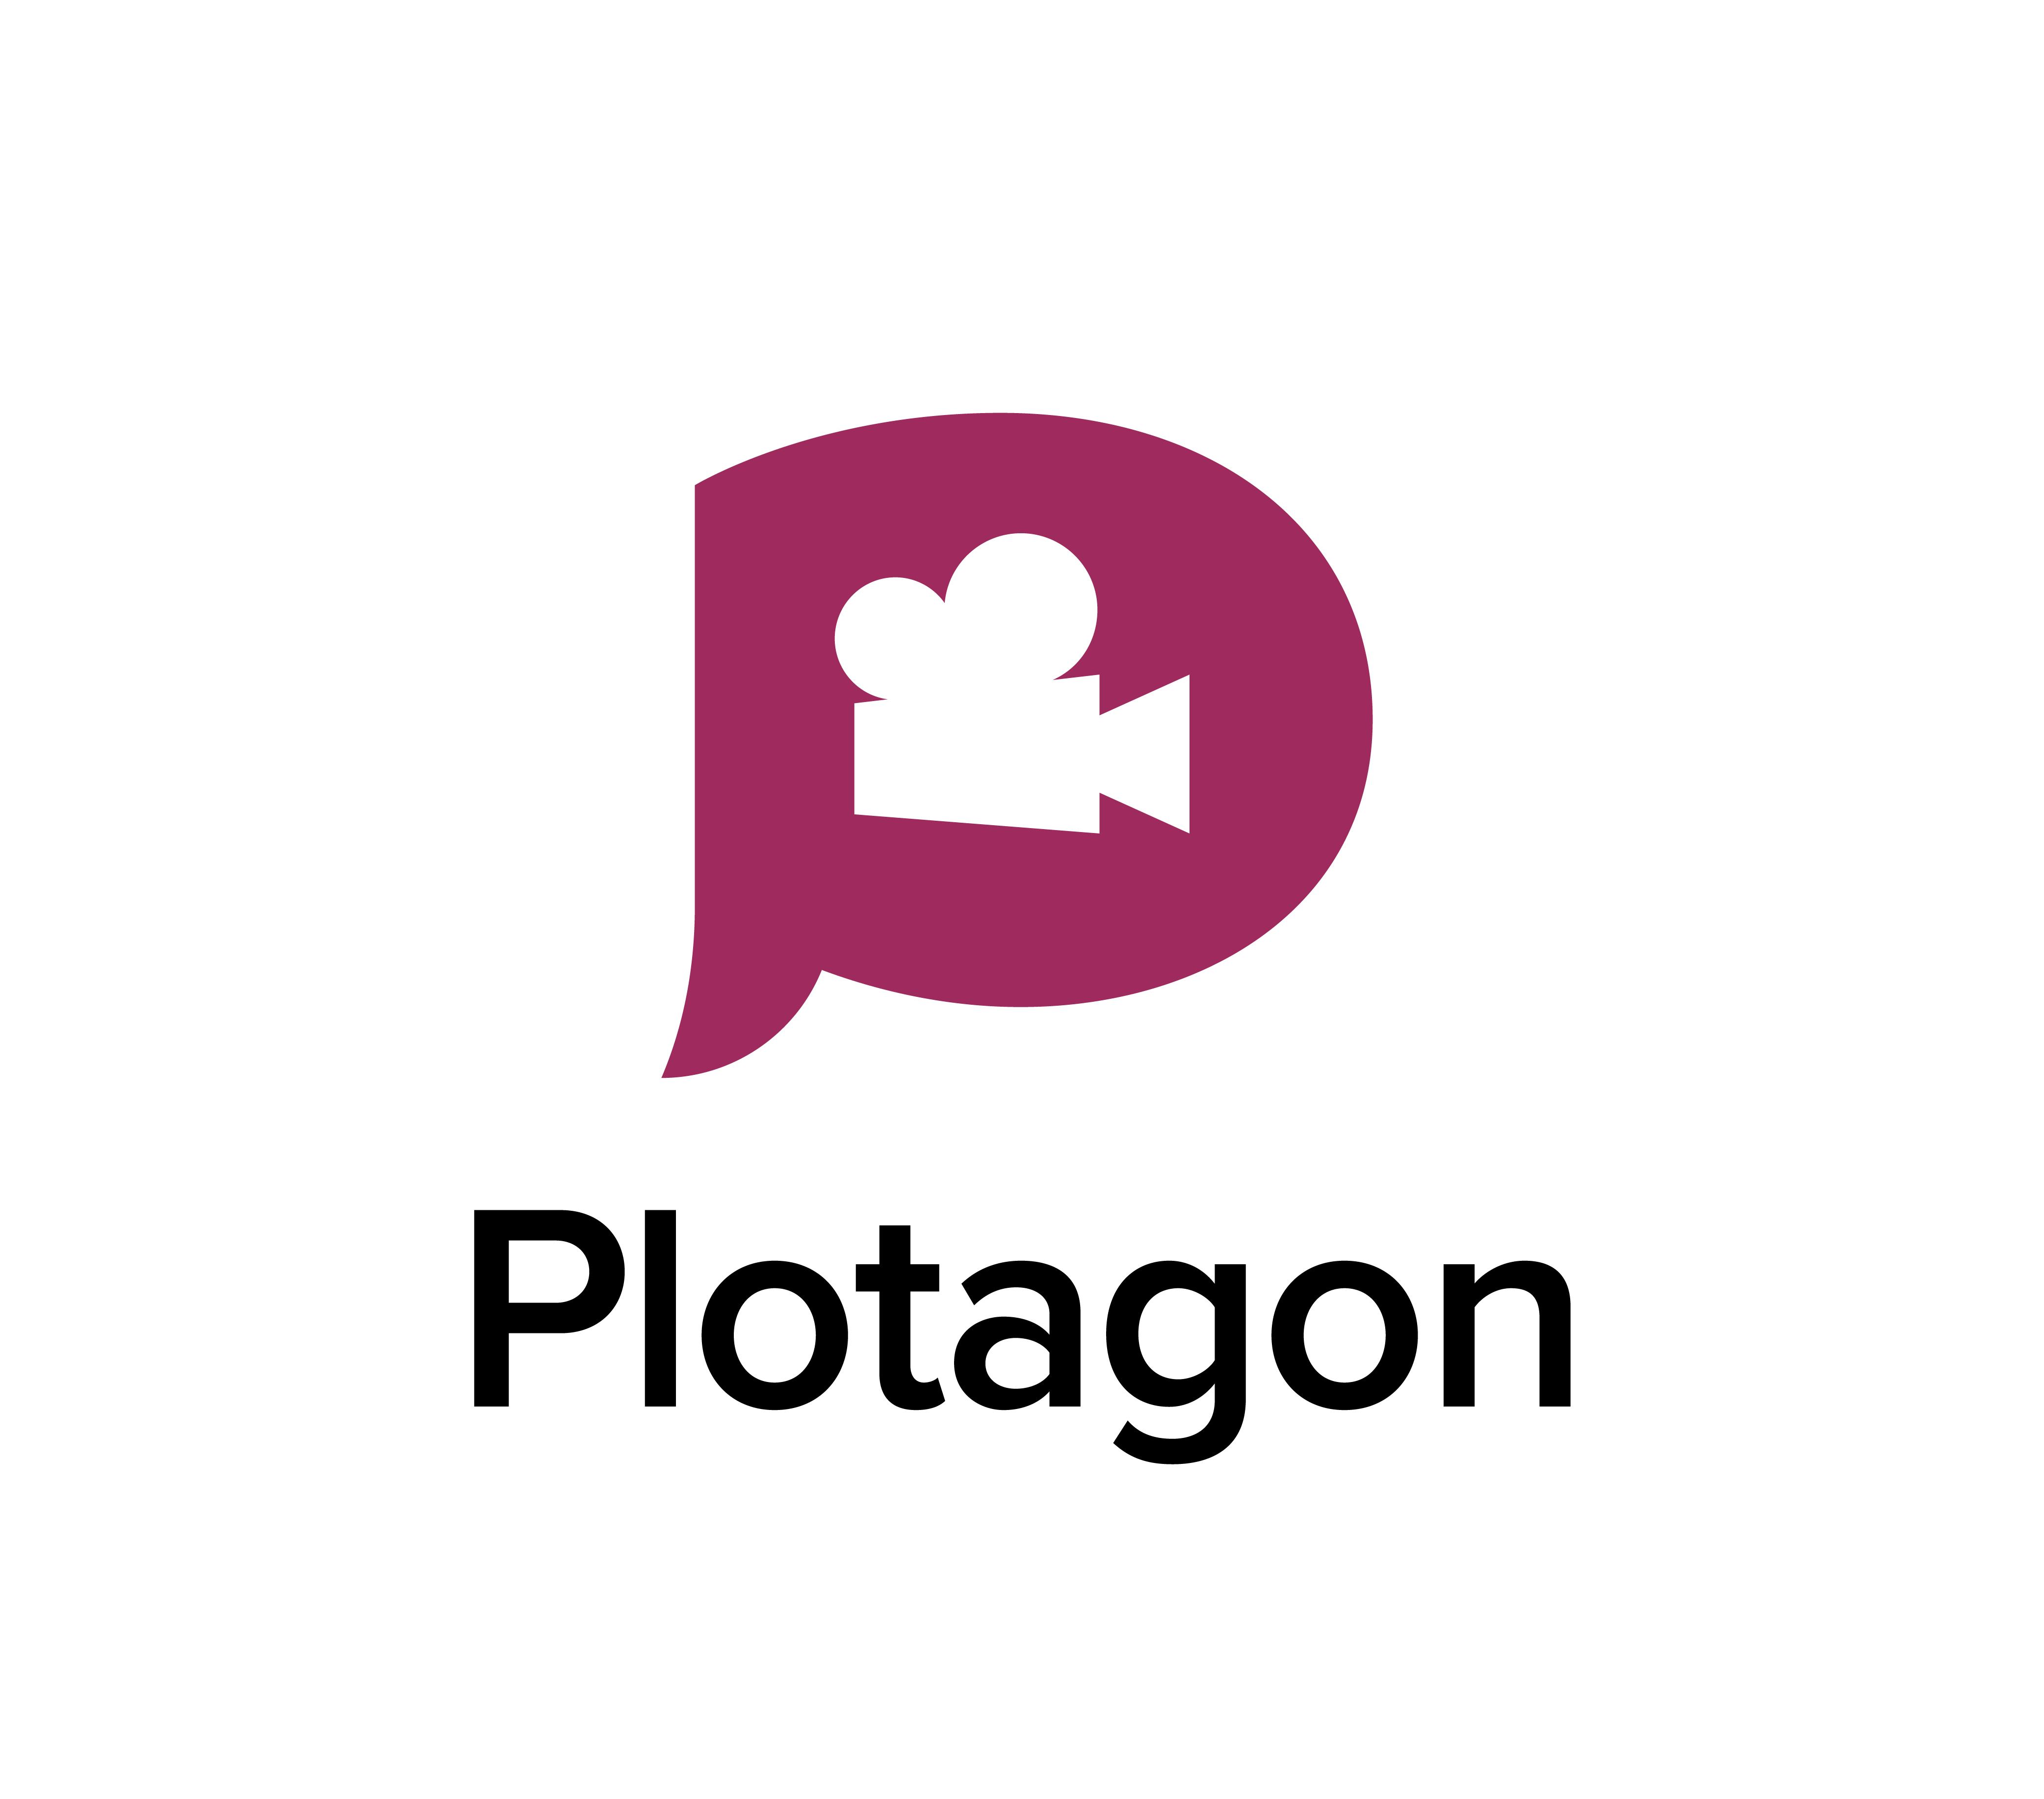 how to get plotagon studio for free mac